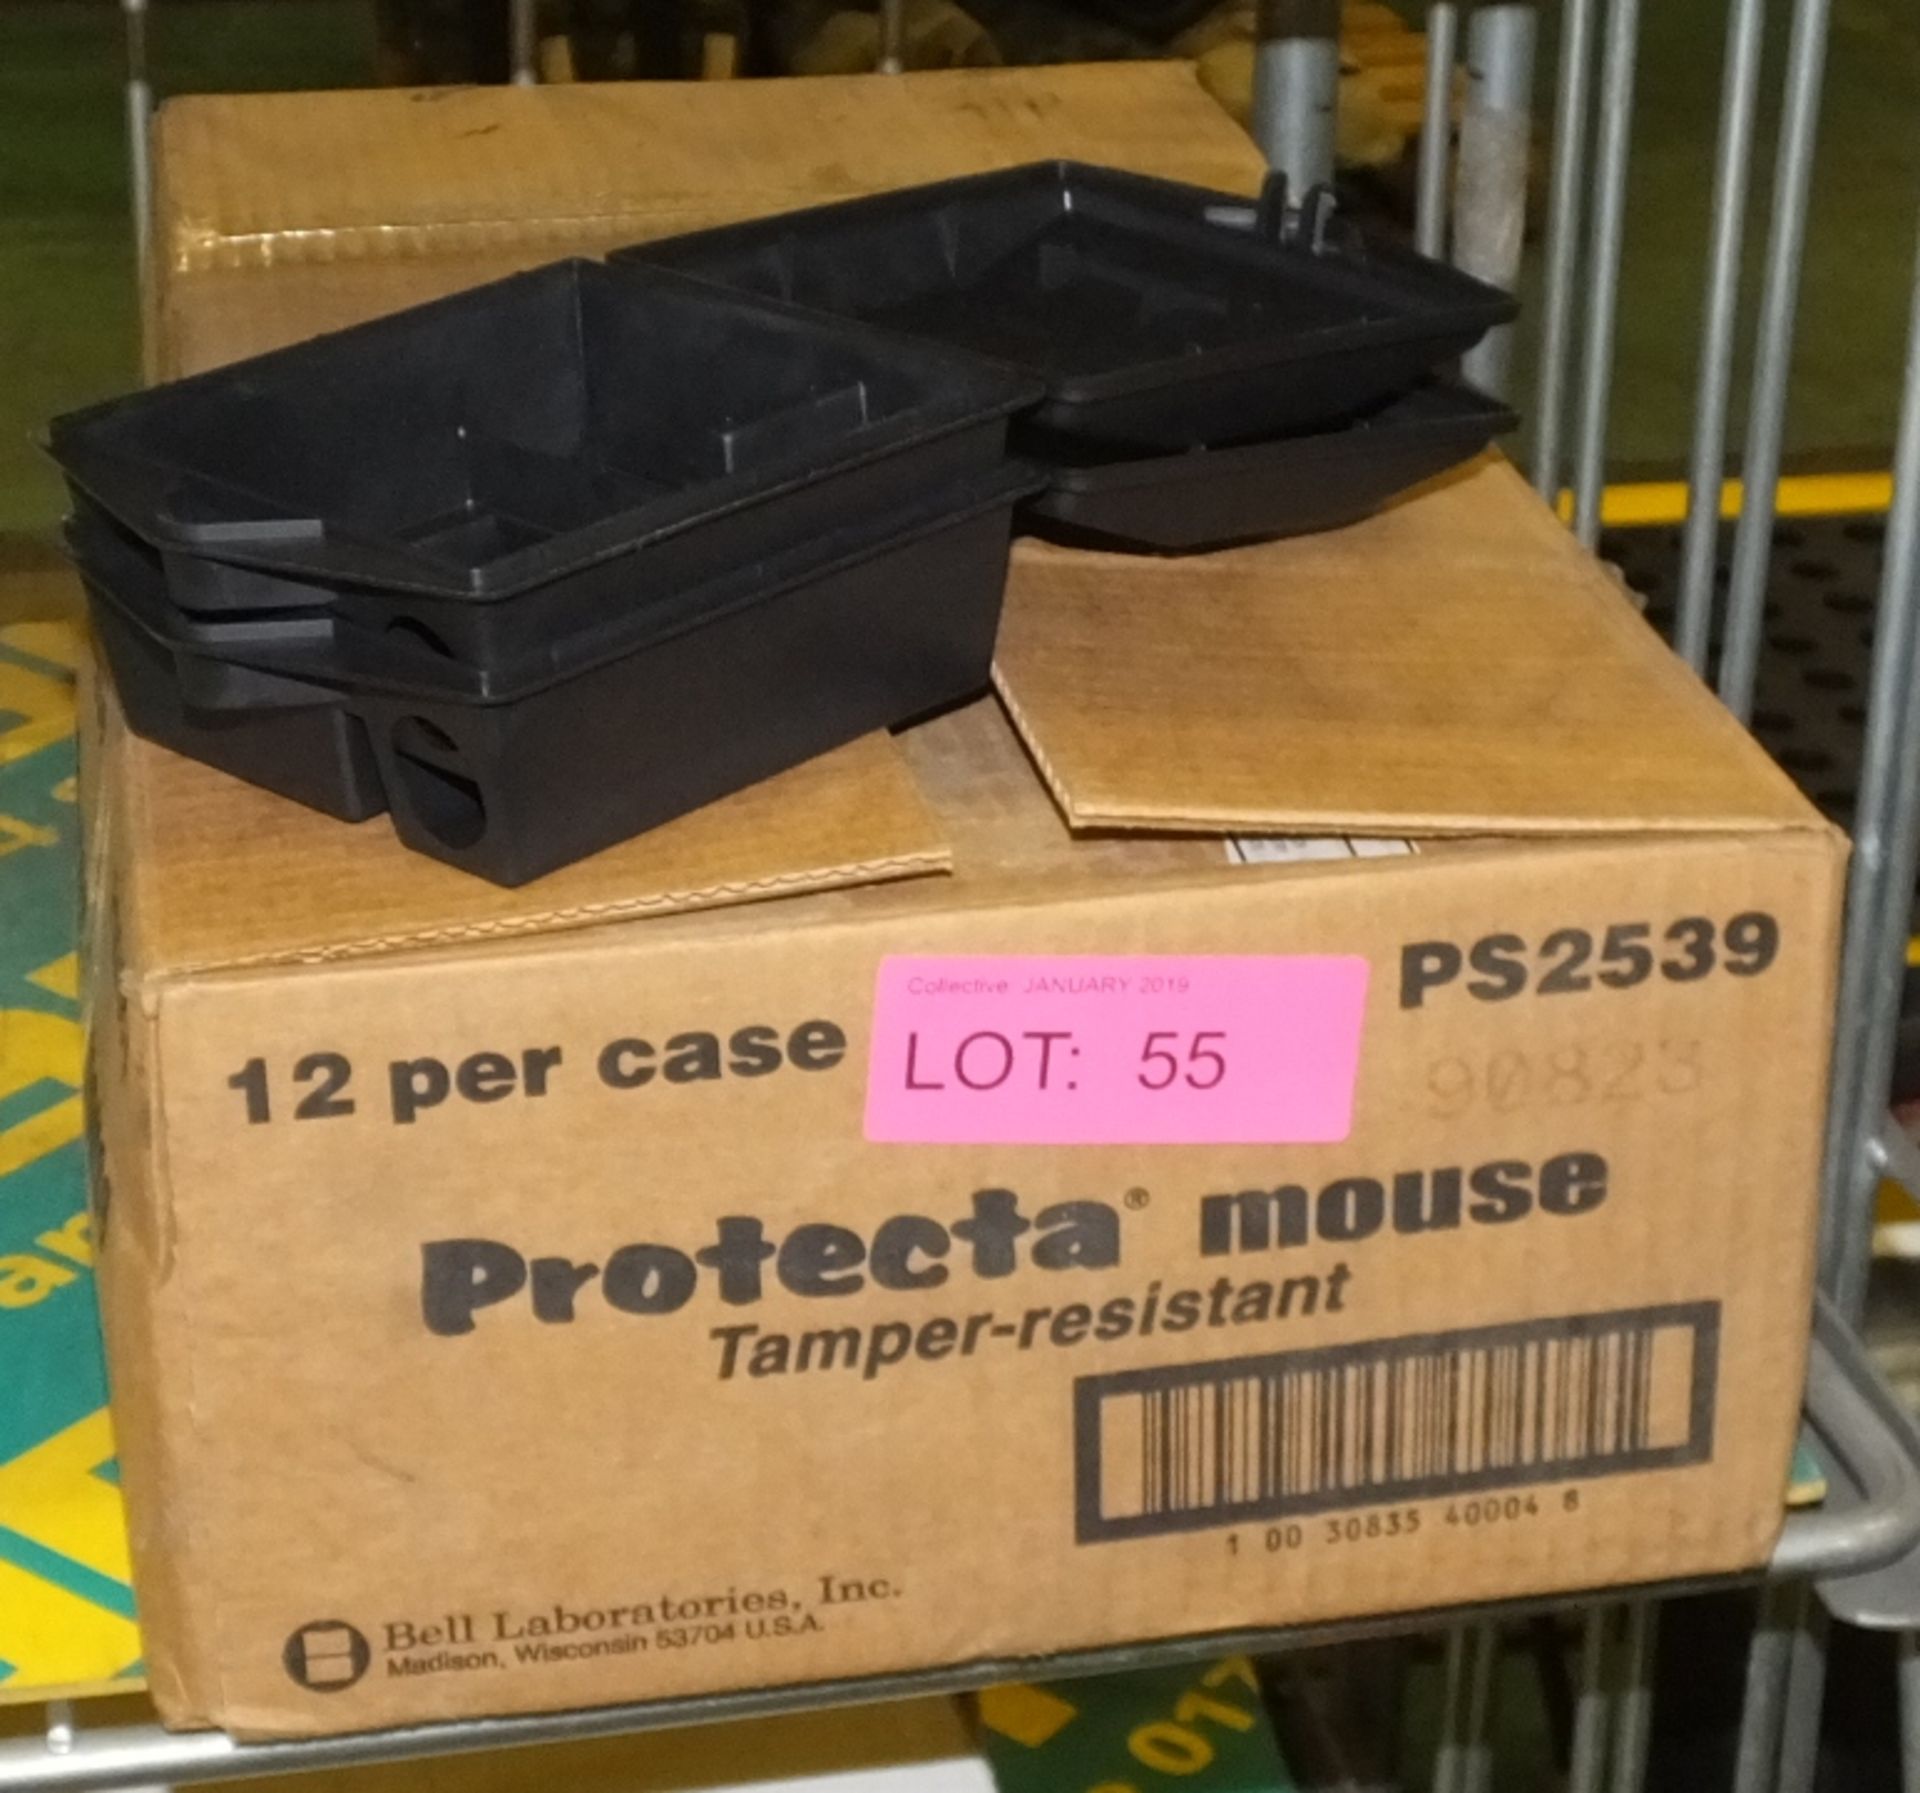 2 Boxes Protecta Mouse traps